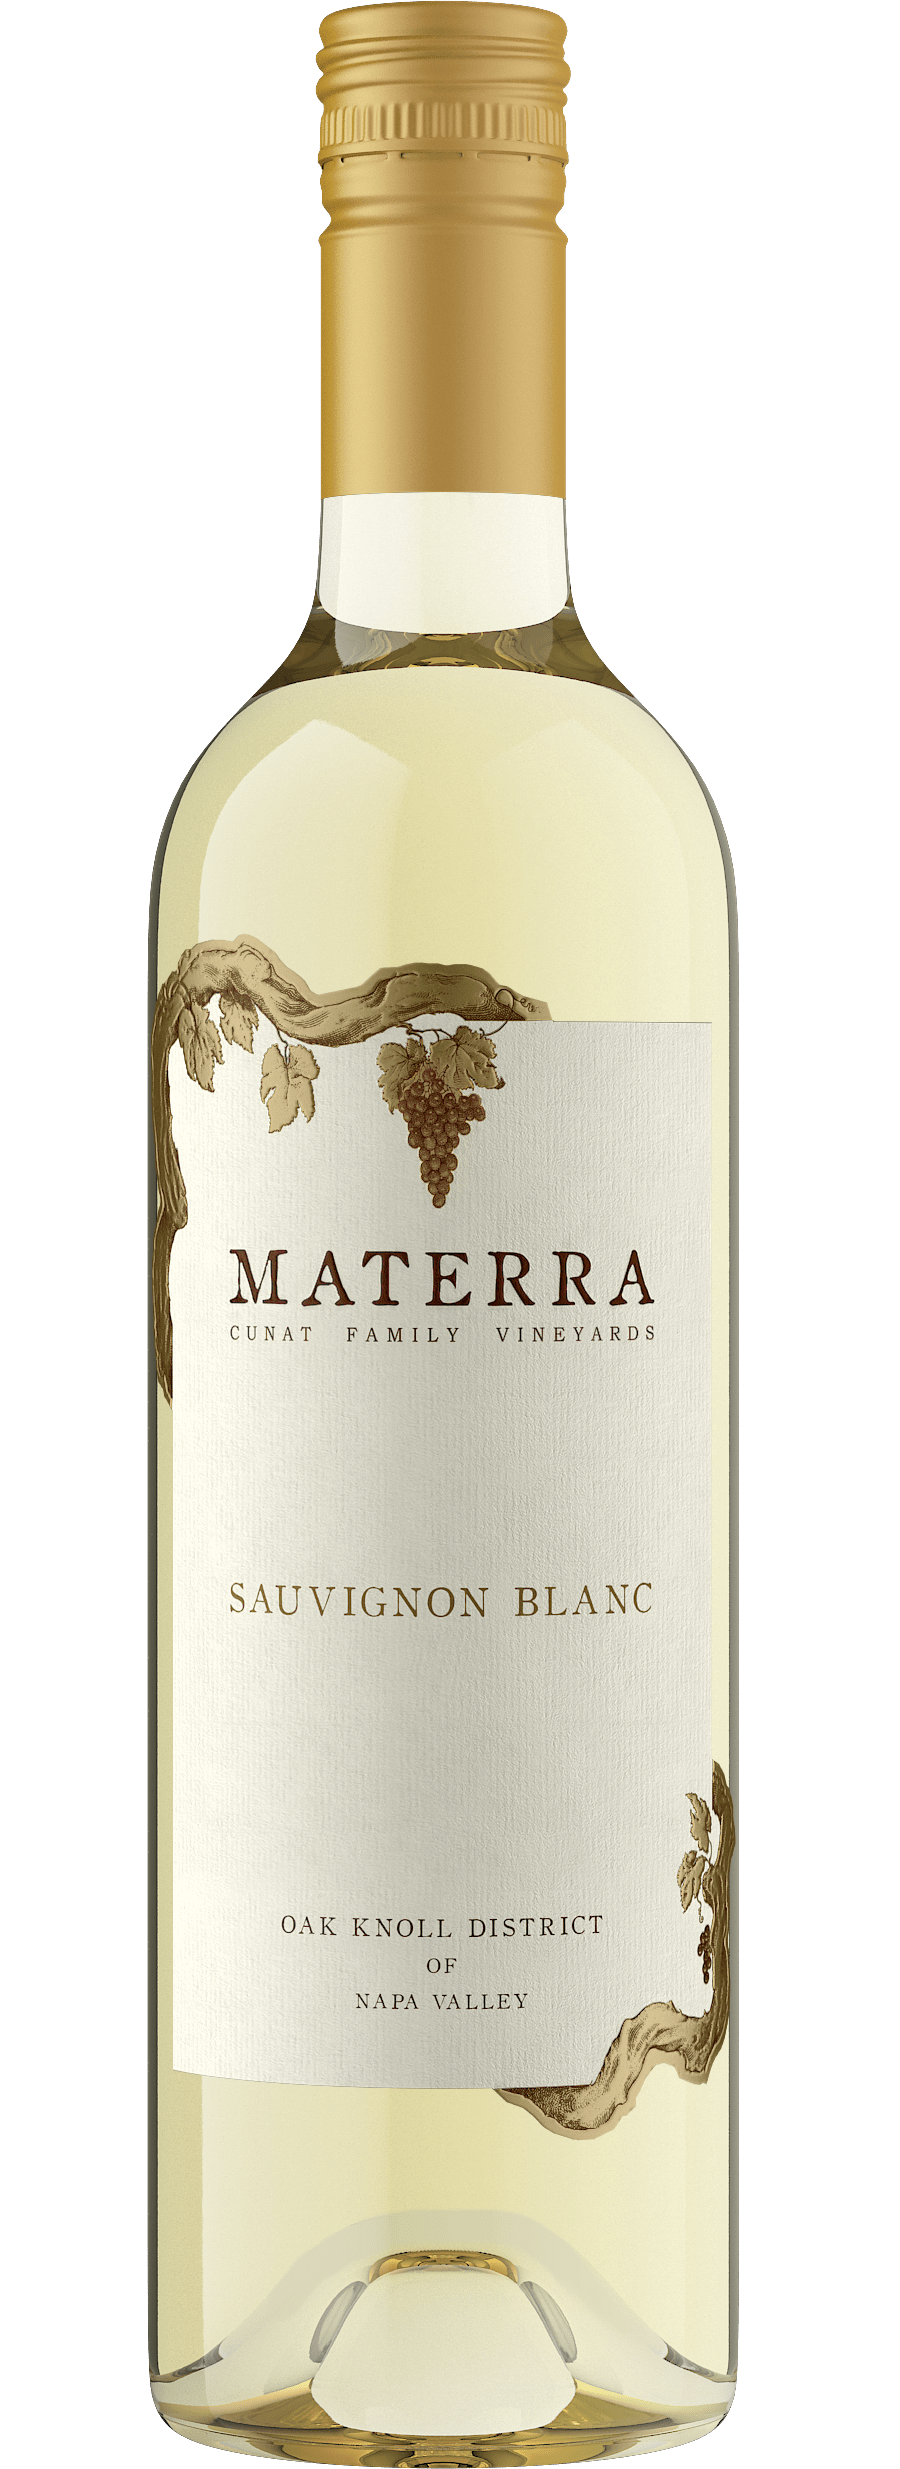 Materra Sauvignon Blanc